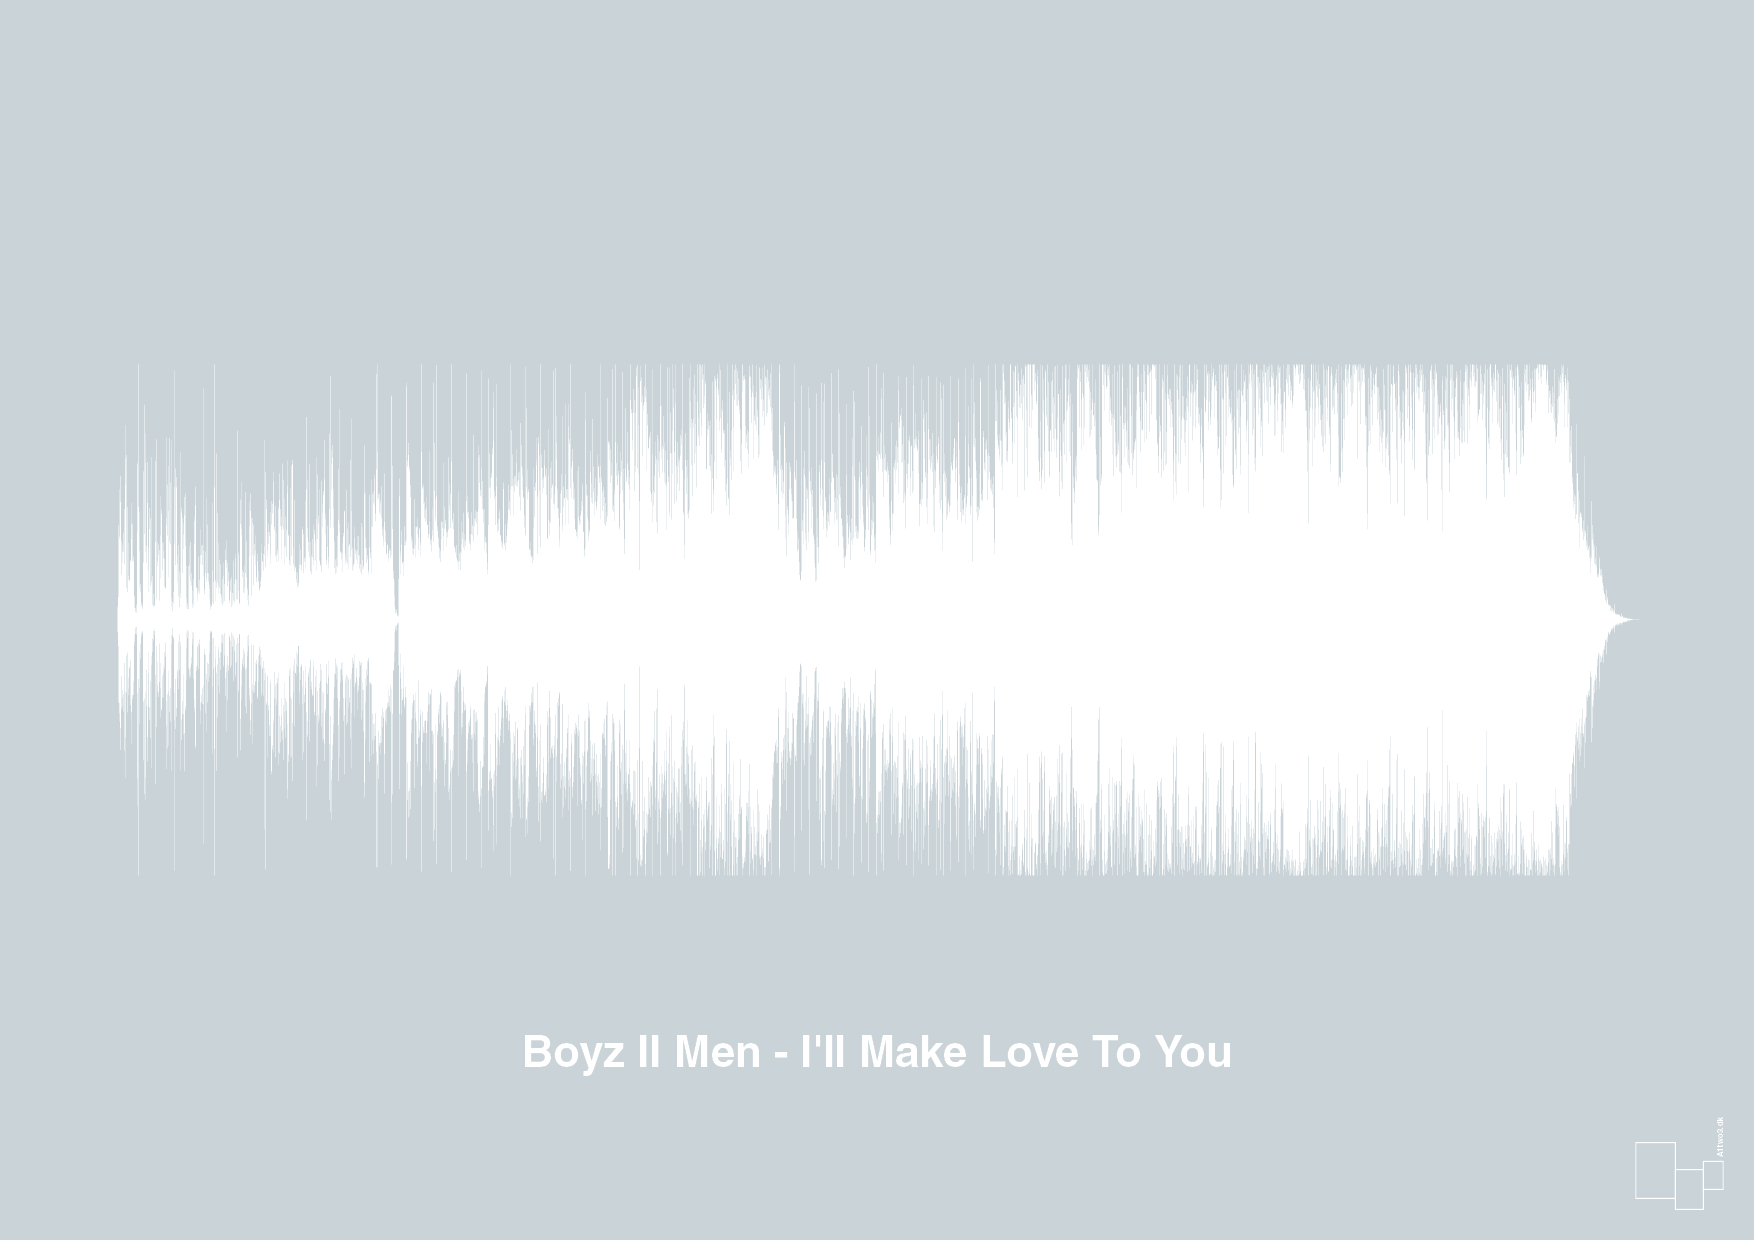 boyz II men - i'll make love to you - Plakat med Musik i Light Drizzle